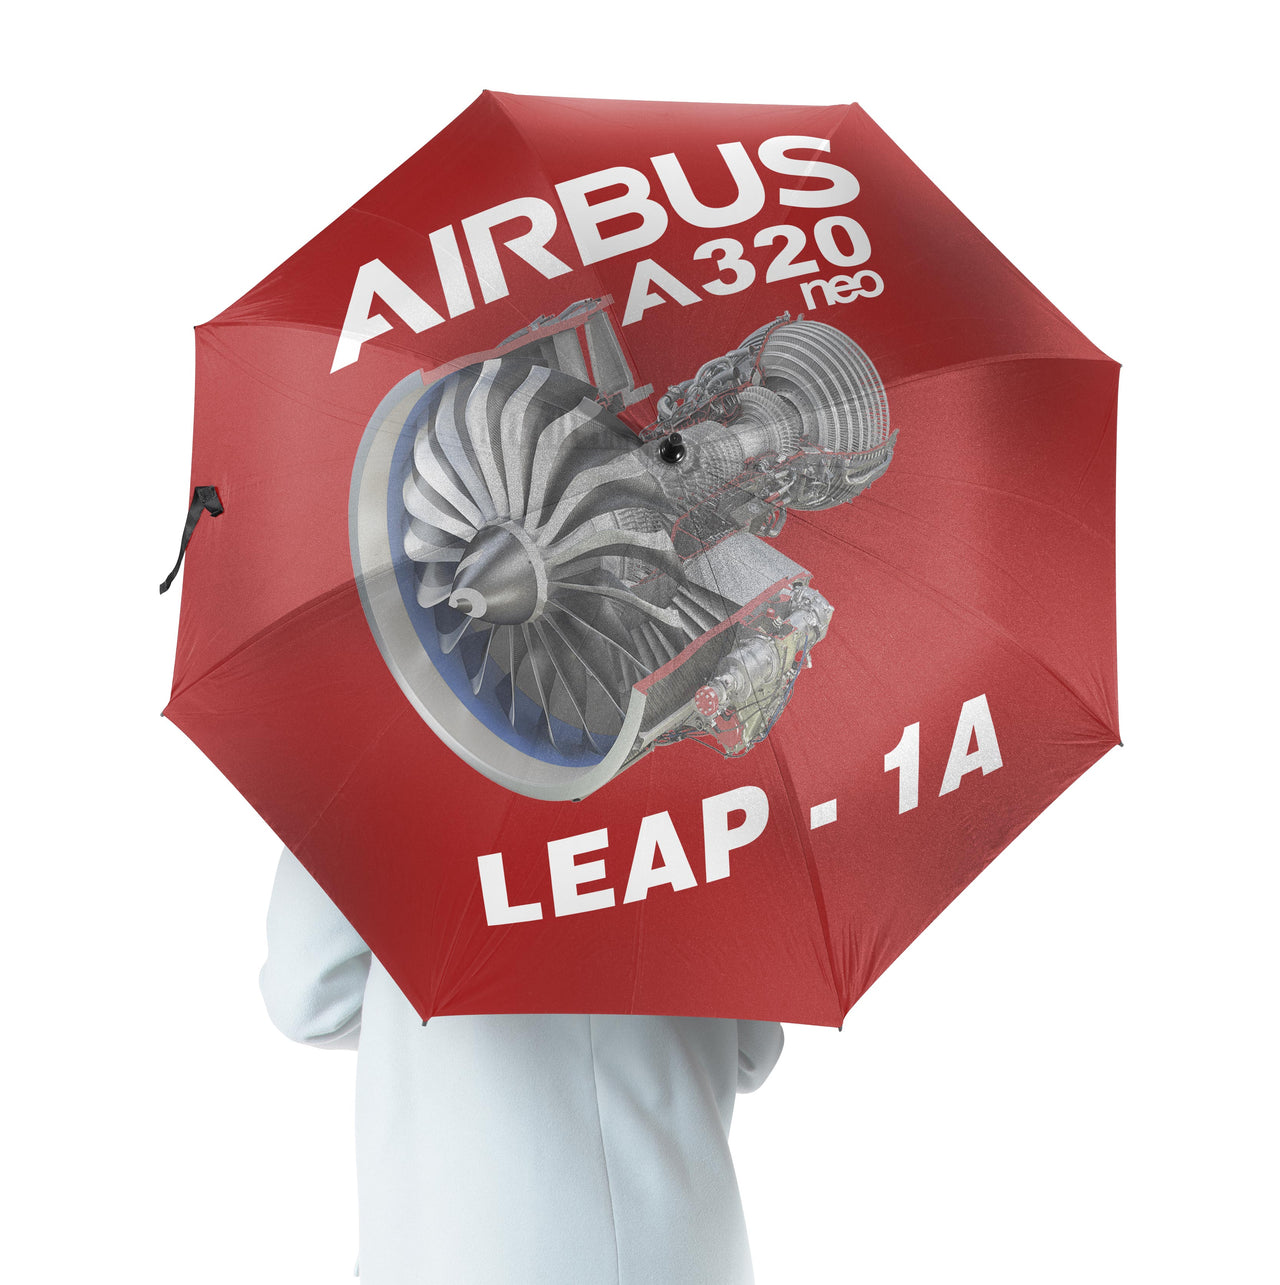 Airbus A320neo & Leap 1A Designed Umbrella